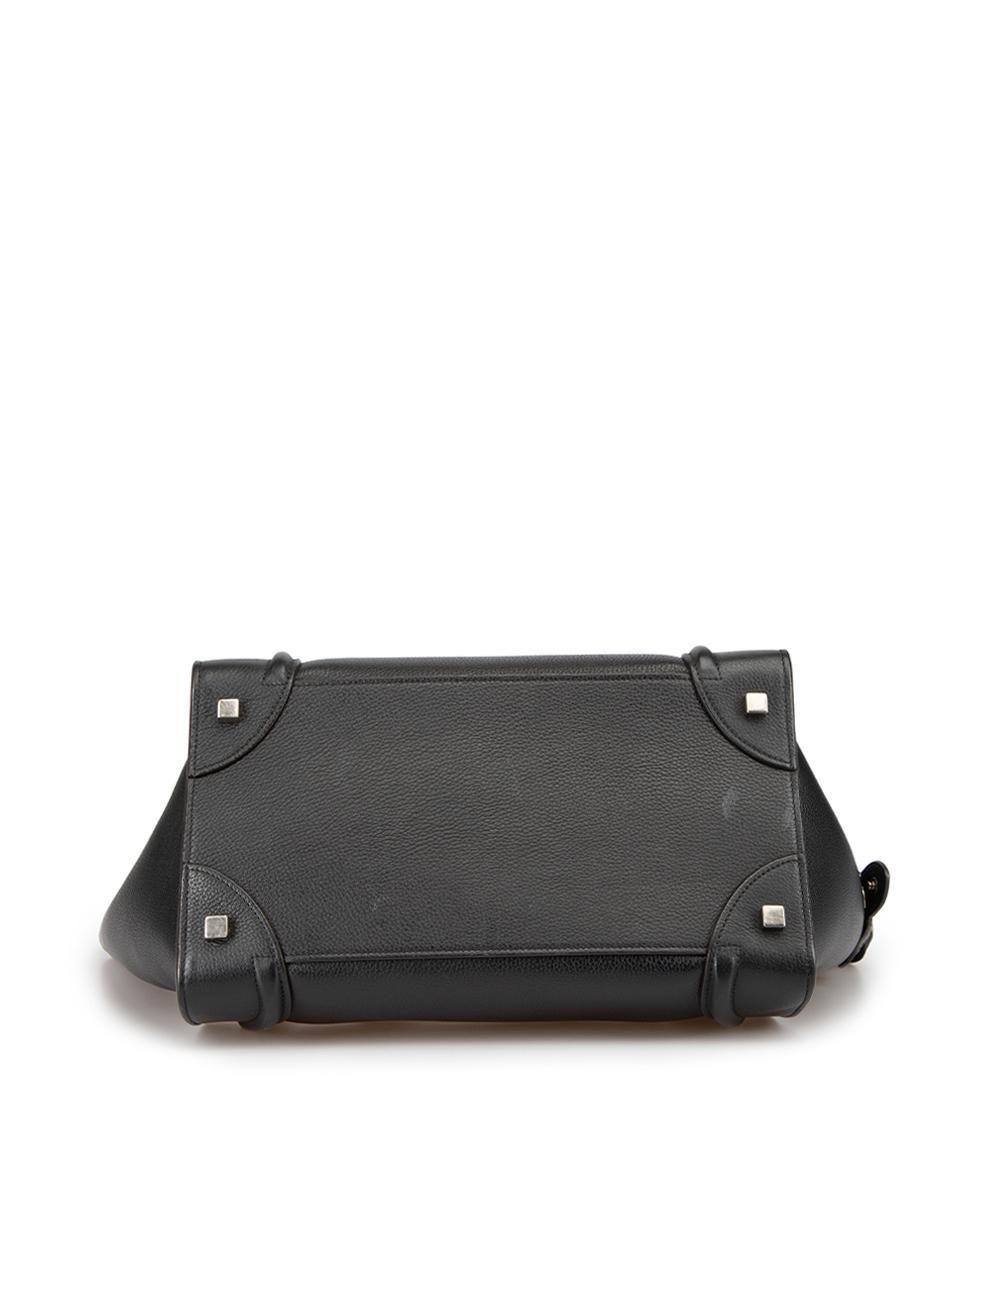 Céline Women's Black Leather Mini Luggage Tote 1